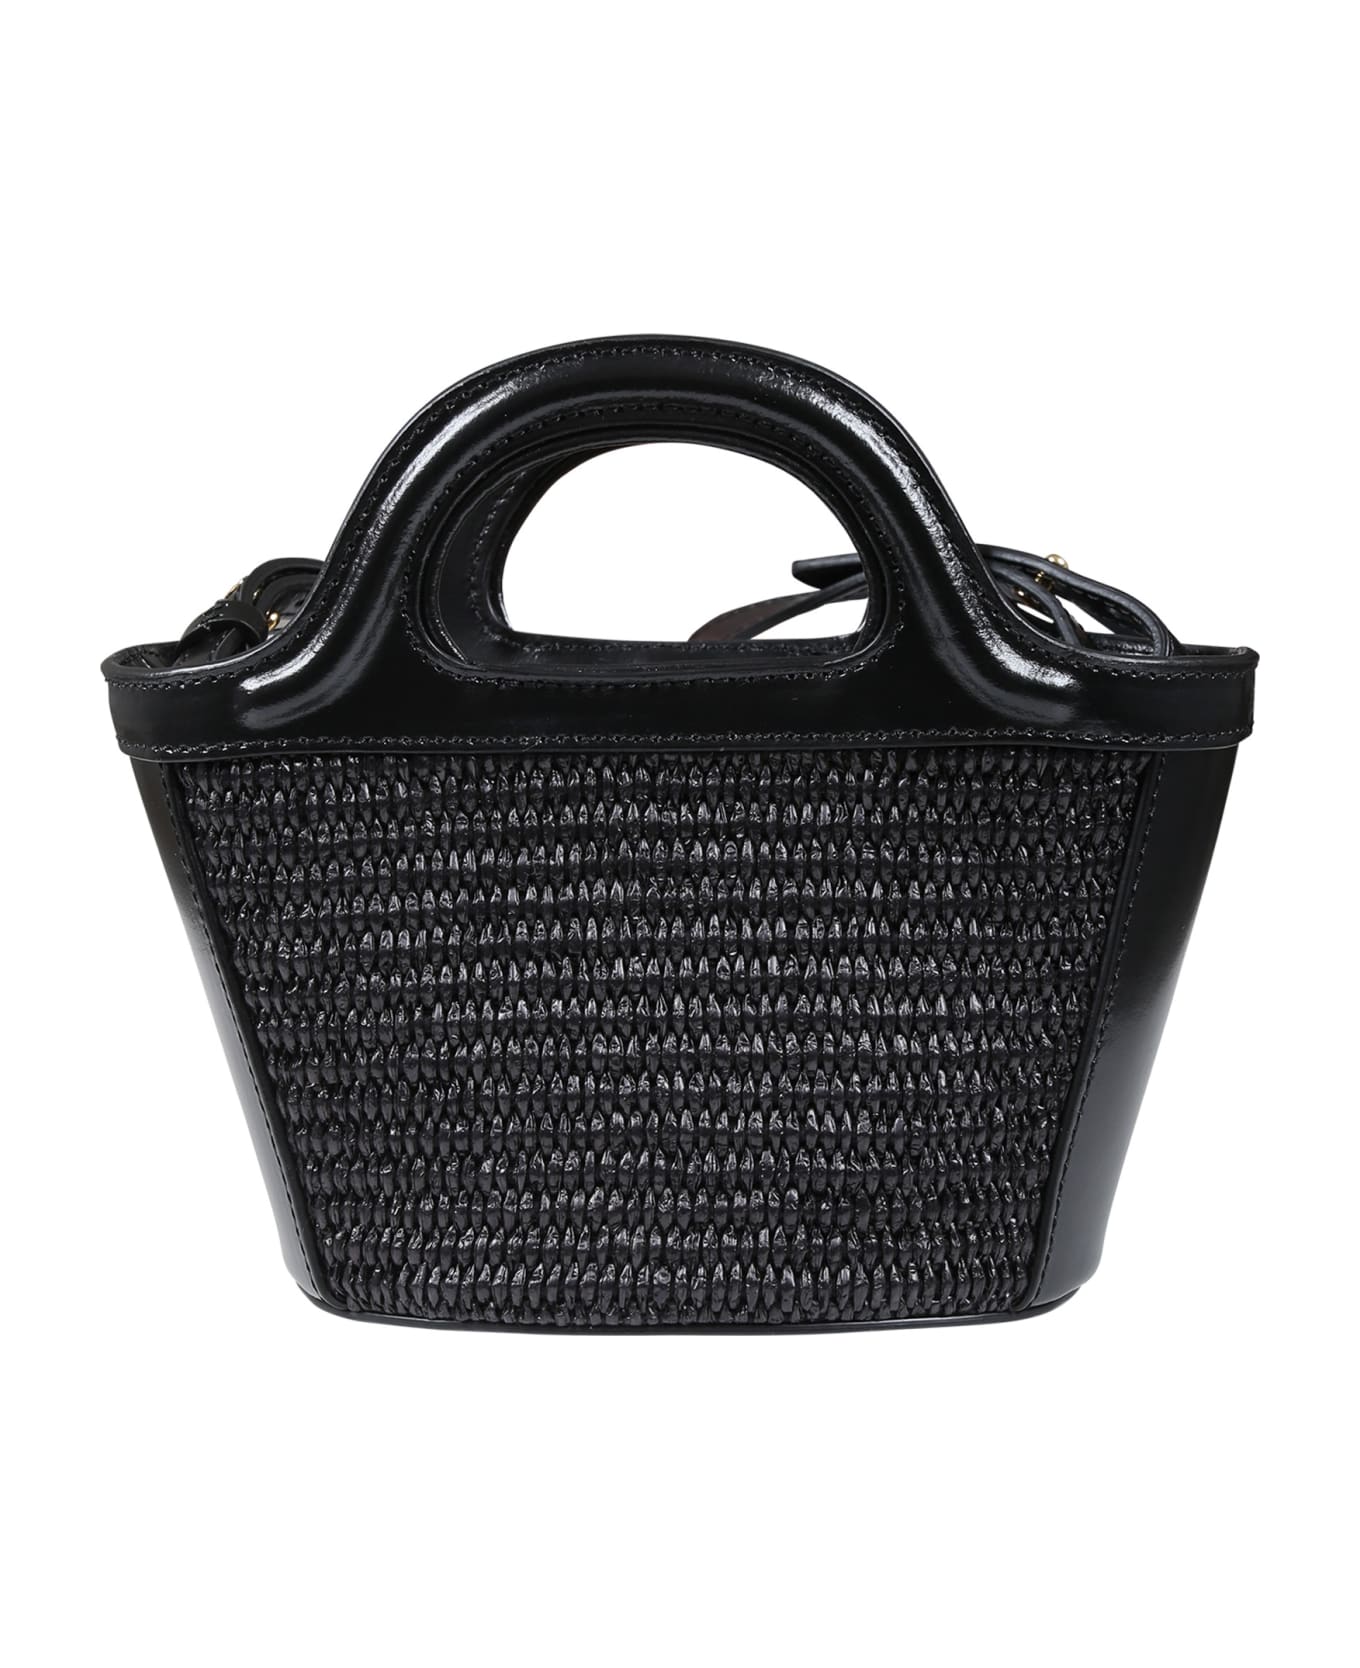 Marni Black Bag For Girl With Logo - Black